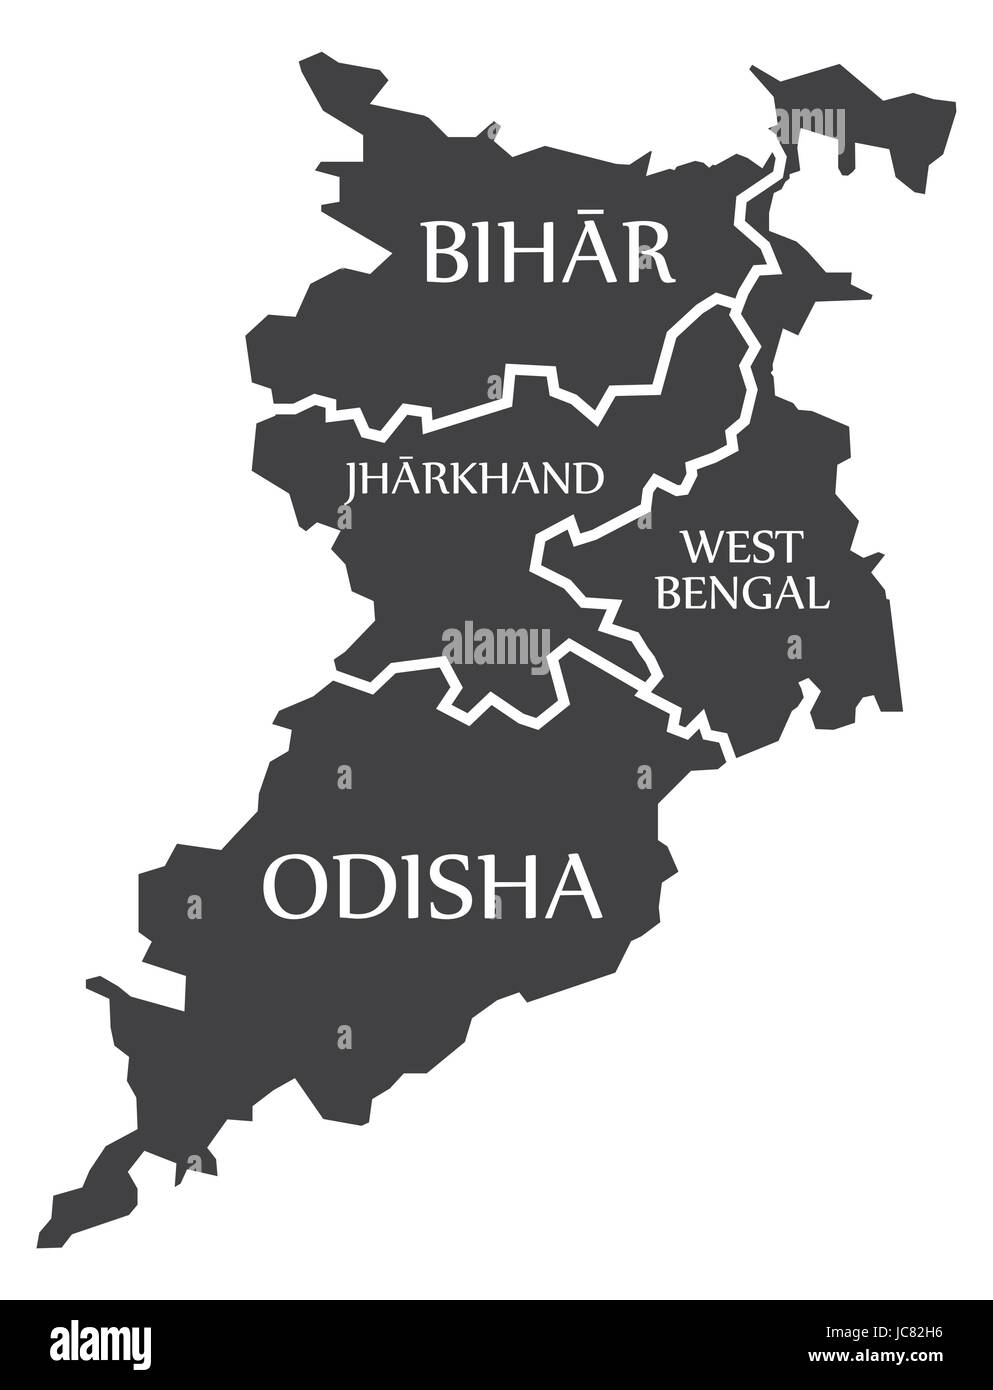 Bihar - Jharkhand - West Bengal - Odisha Map Illustration of Indian states Stock Vector